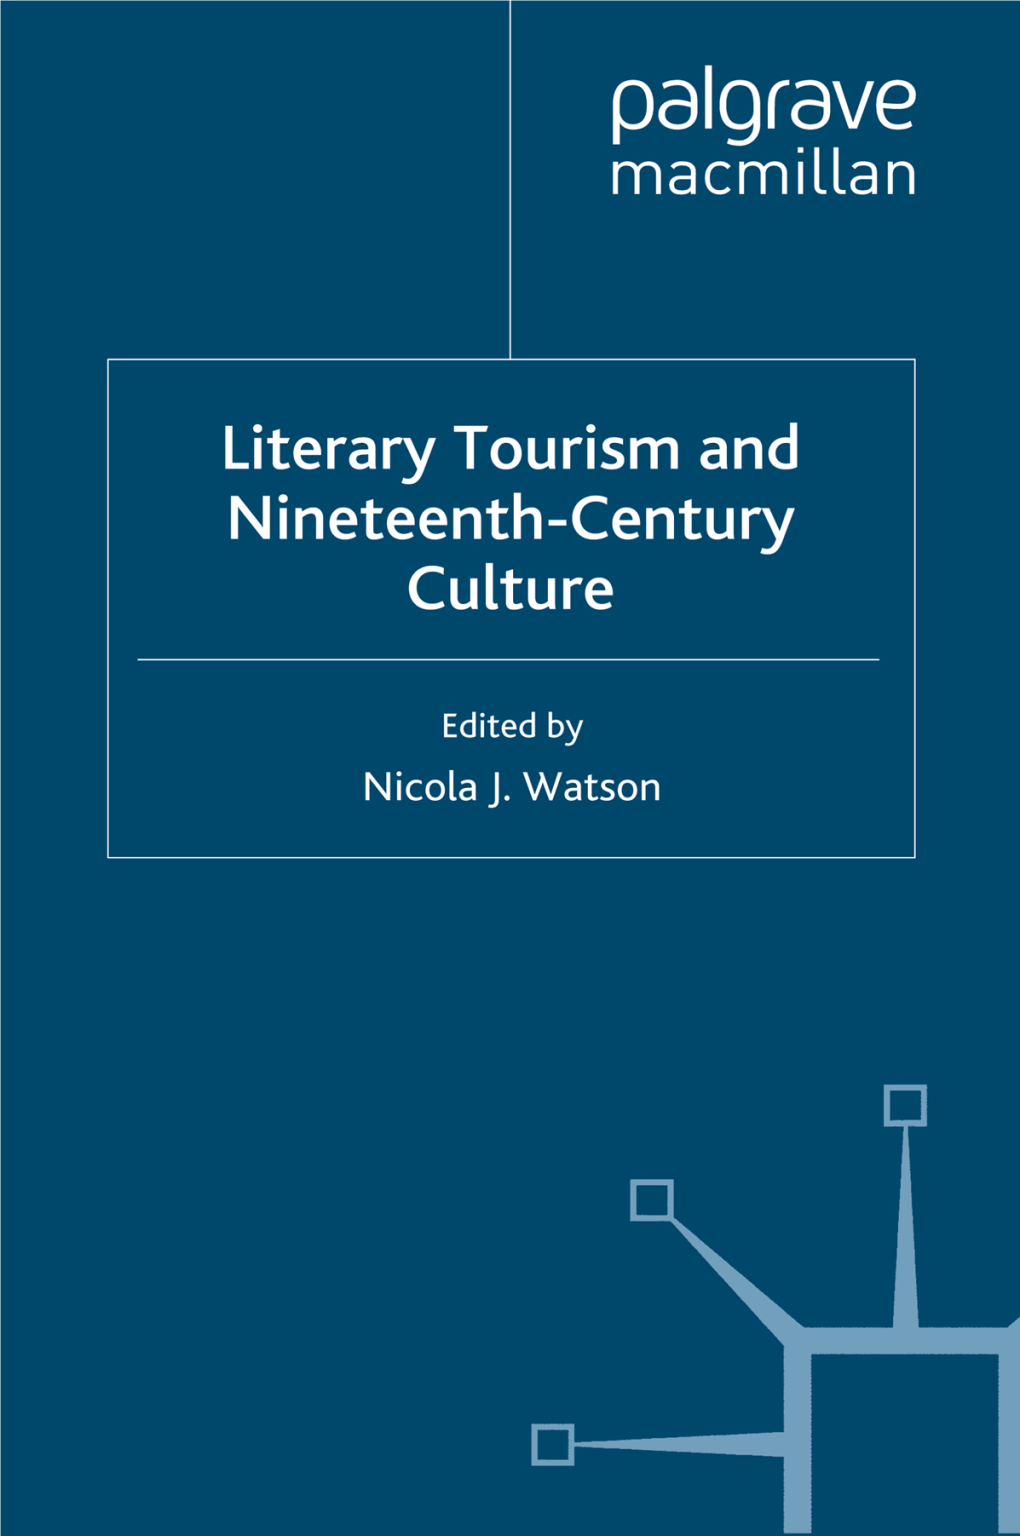 Nicola J. Watson (Eds.)-Literary Tourism and Nineteenth- Century Culture-Palgrave Macmillan UK (2009).Pdf